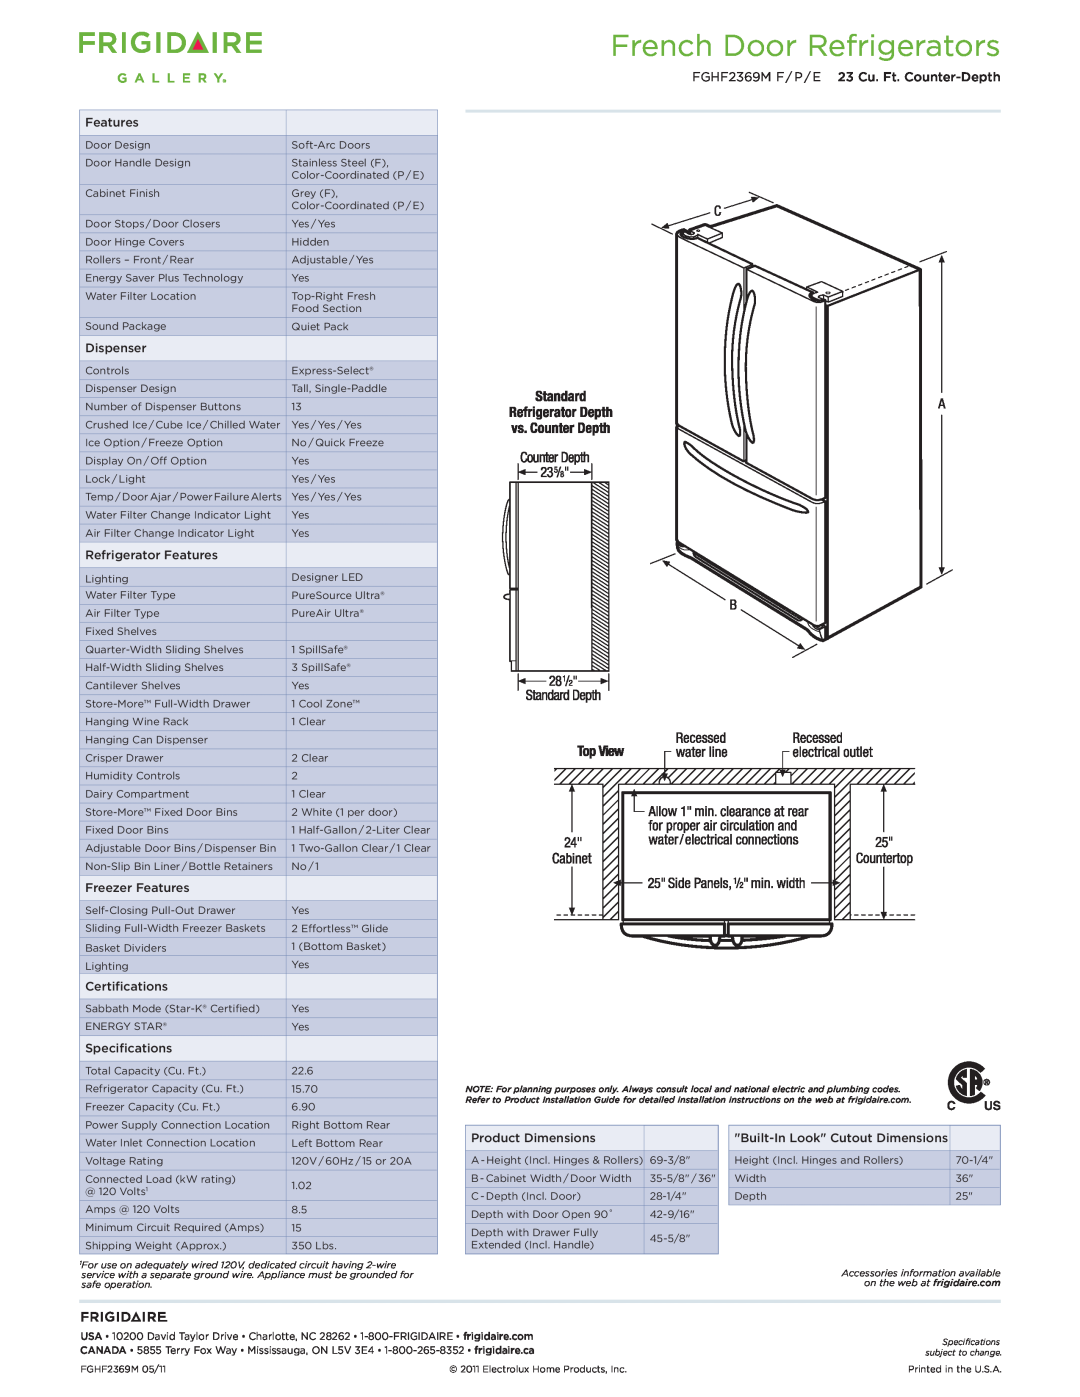 Frigidaire dimensions French Door Refrigerators, FGHF2369M F / P / E 23 Cu. Ft. Counter-Depth 